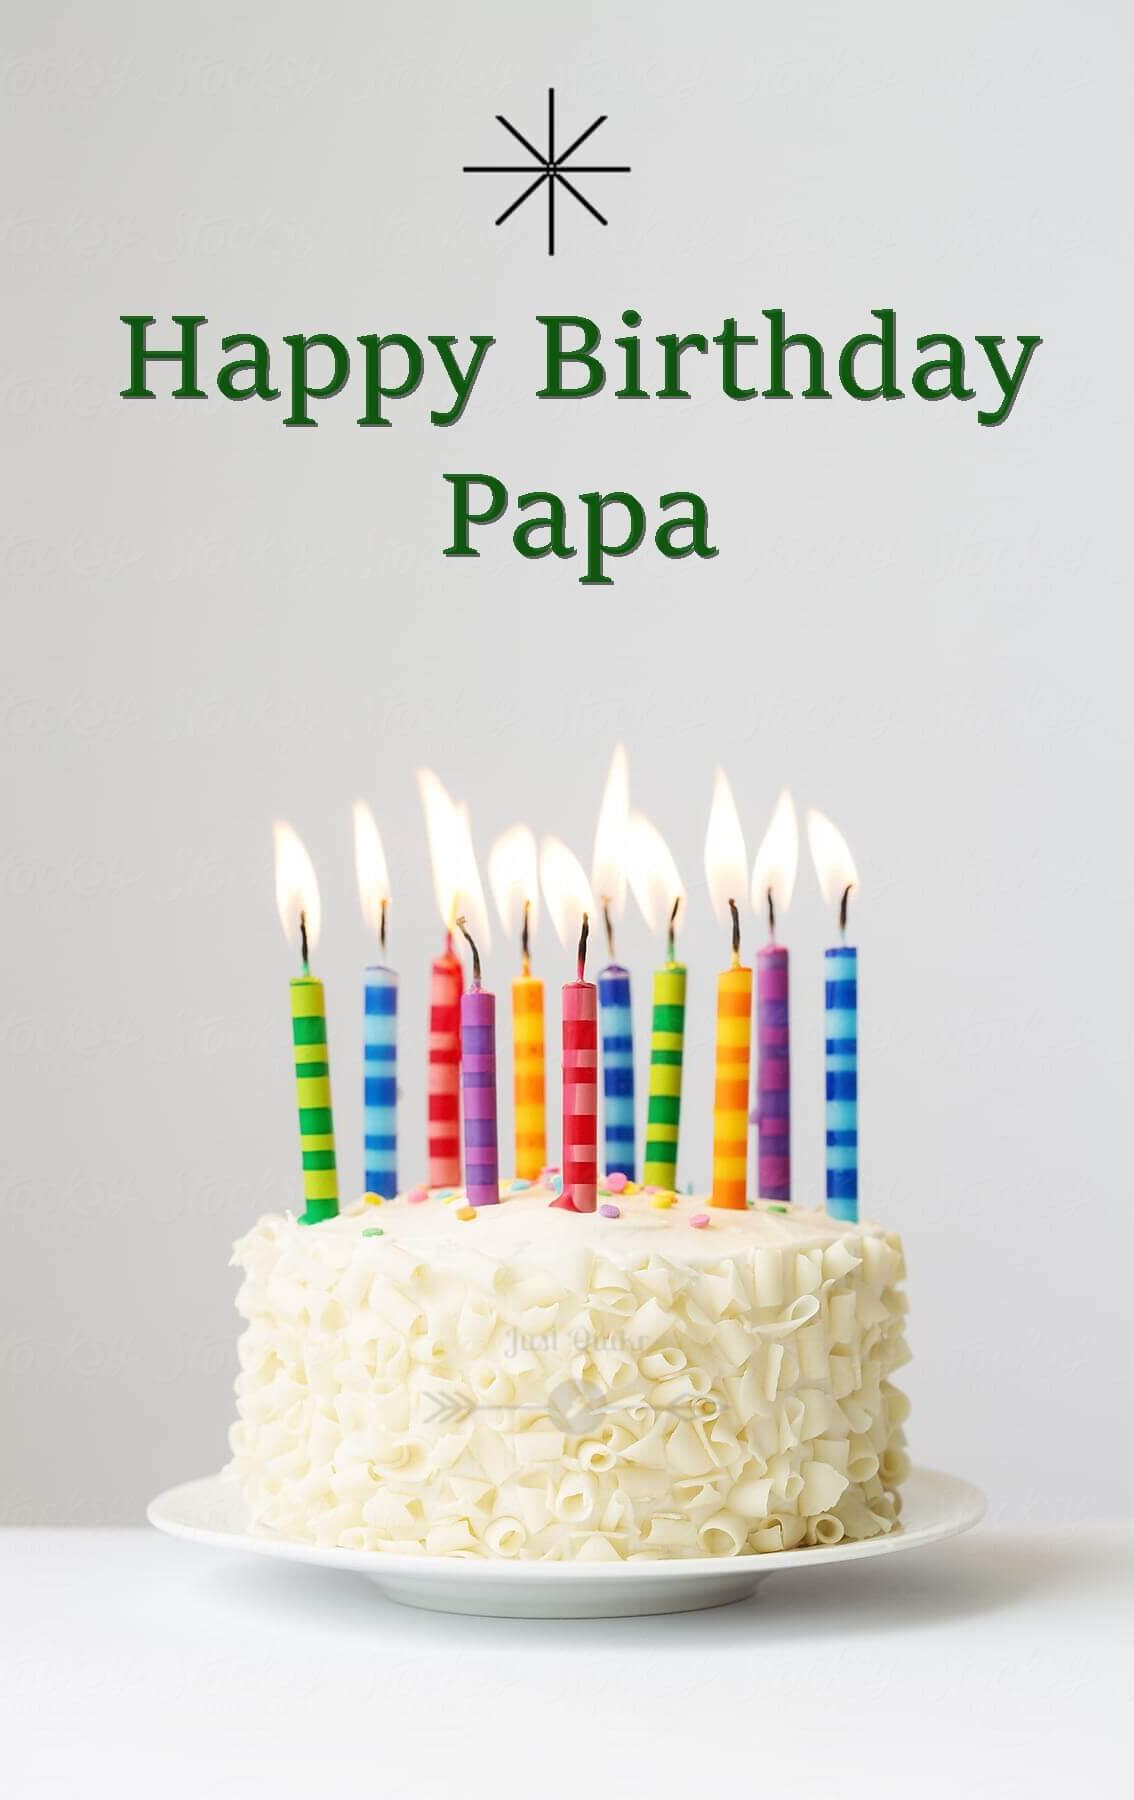 Happy Birthday papa Cake Images